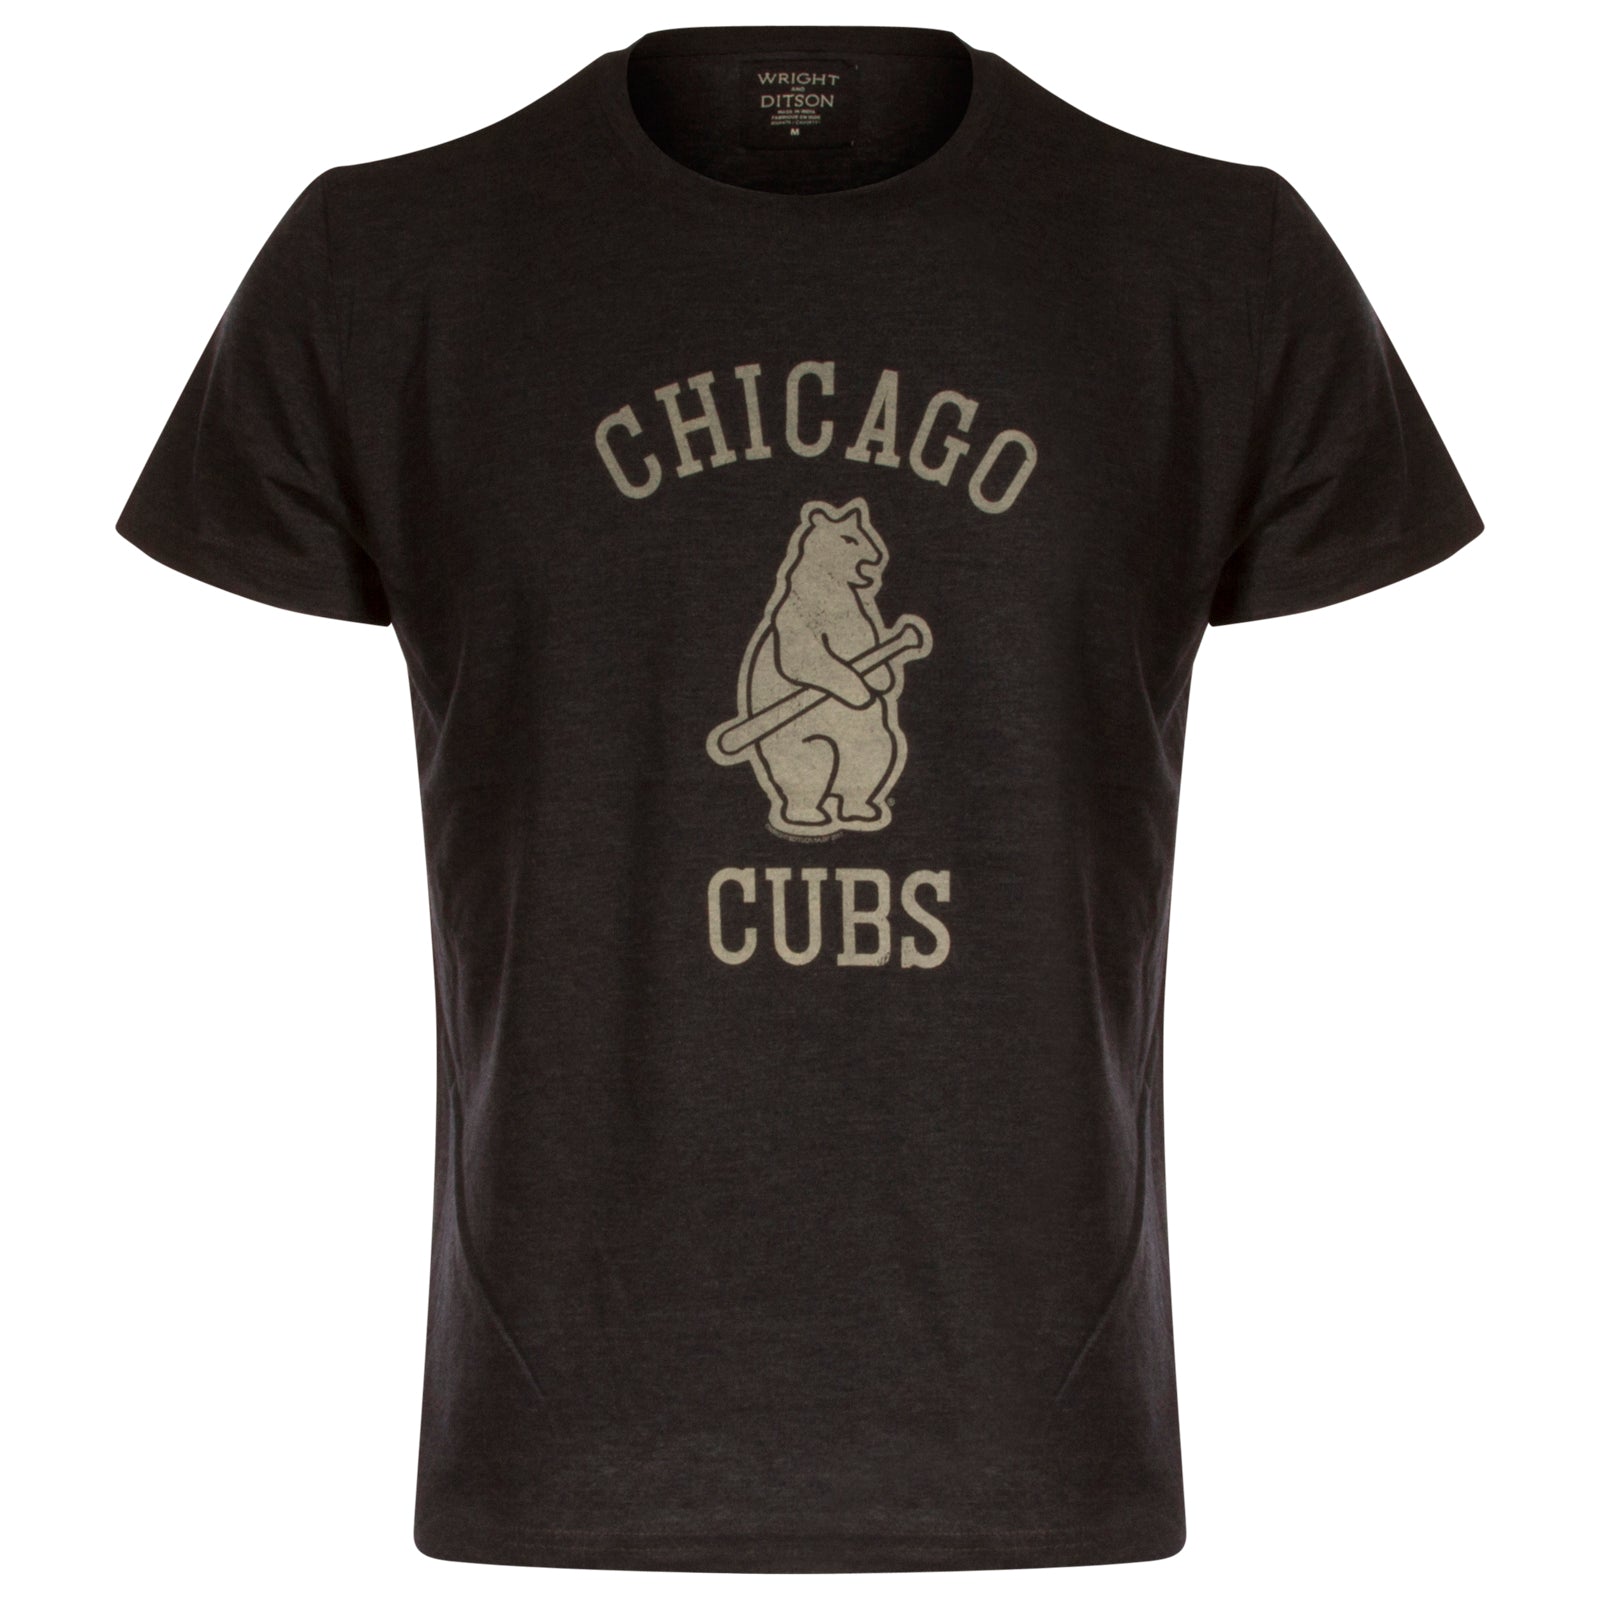 Vintage Style Chicago Cubs T-Shirt, MLB Baseball Shirt, Major